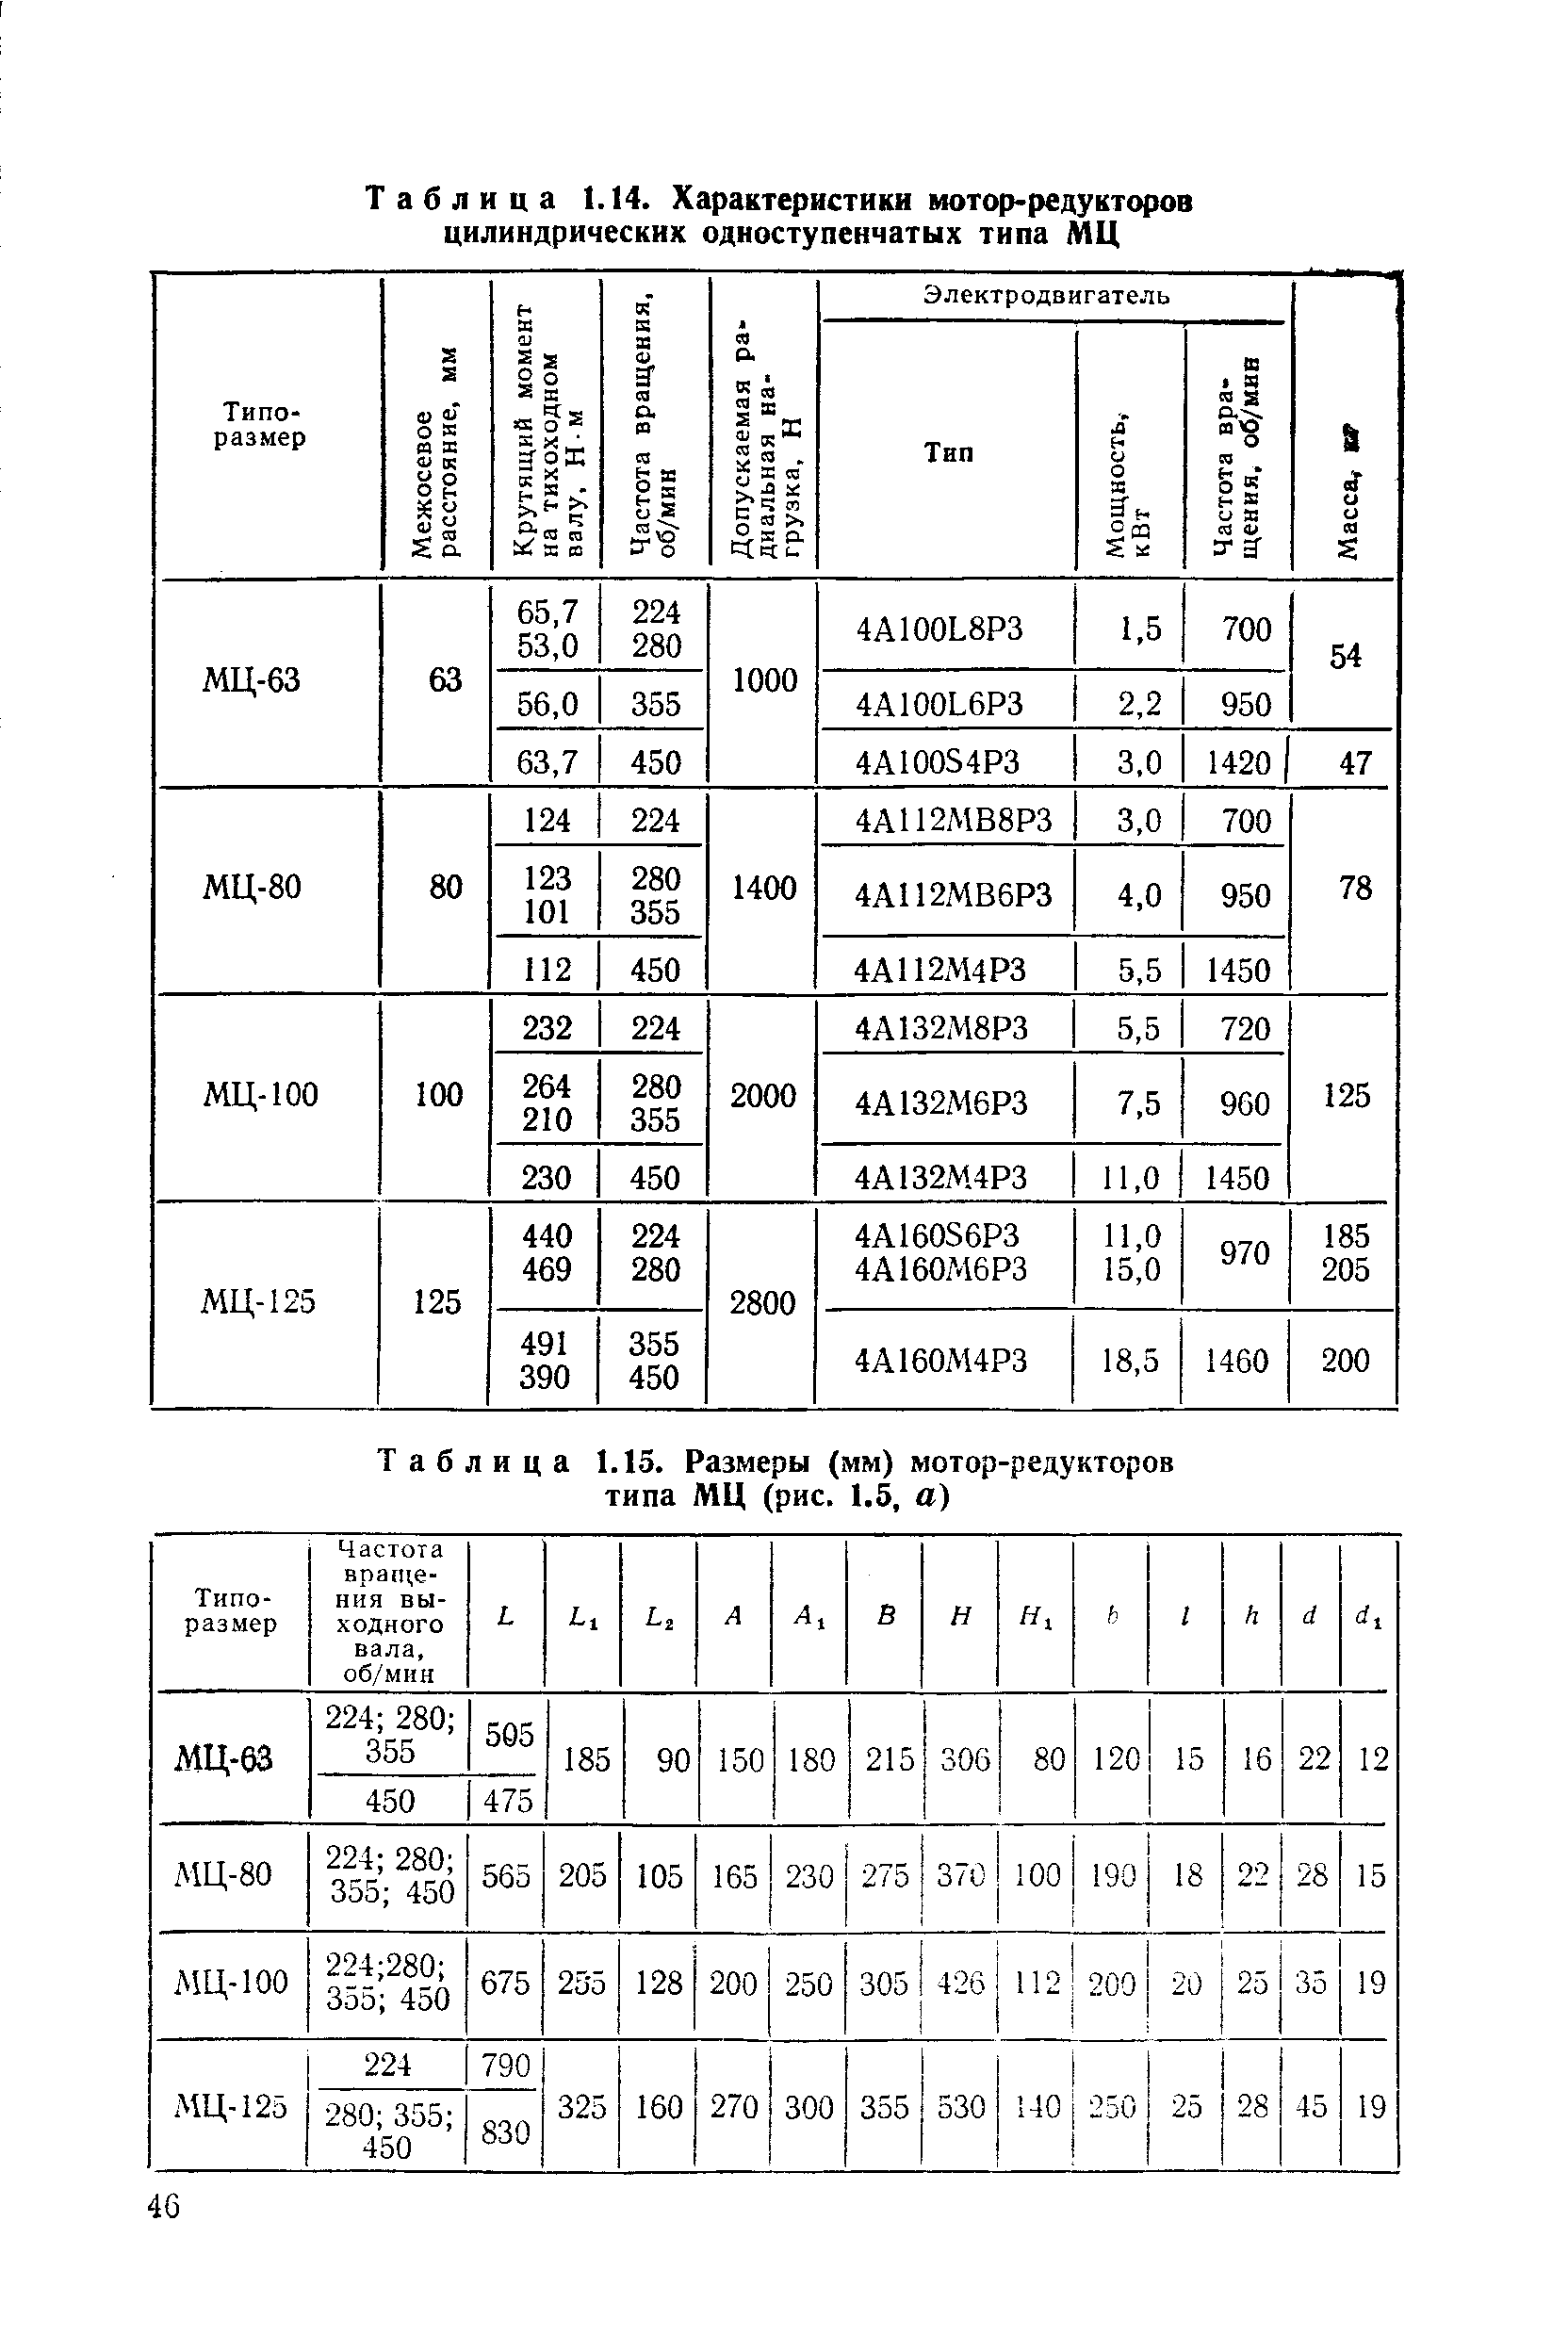 Таблица 1.14. Характеристики мотор-редукторов
